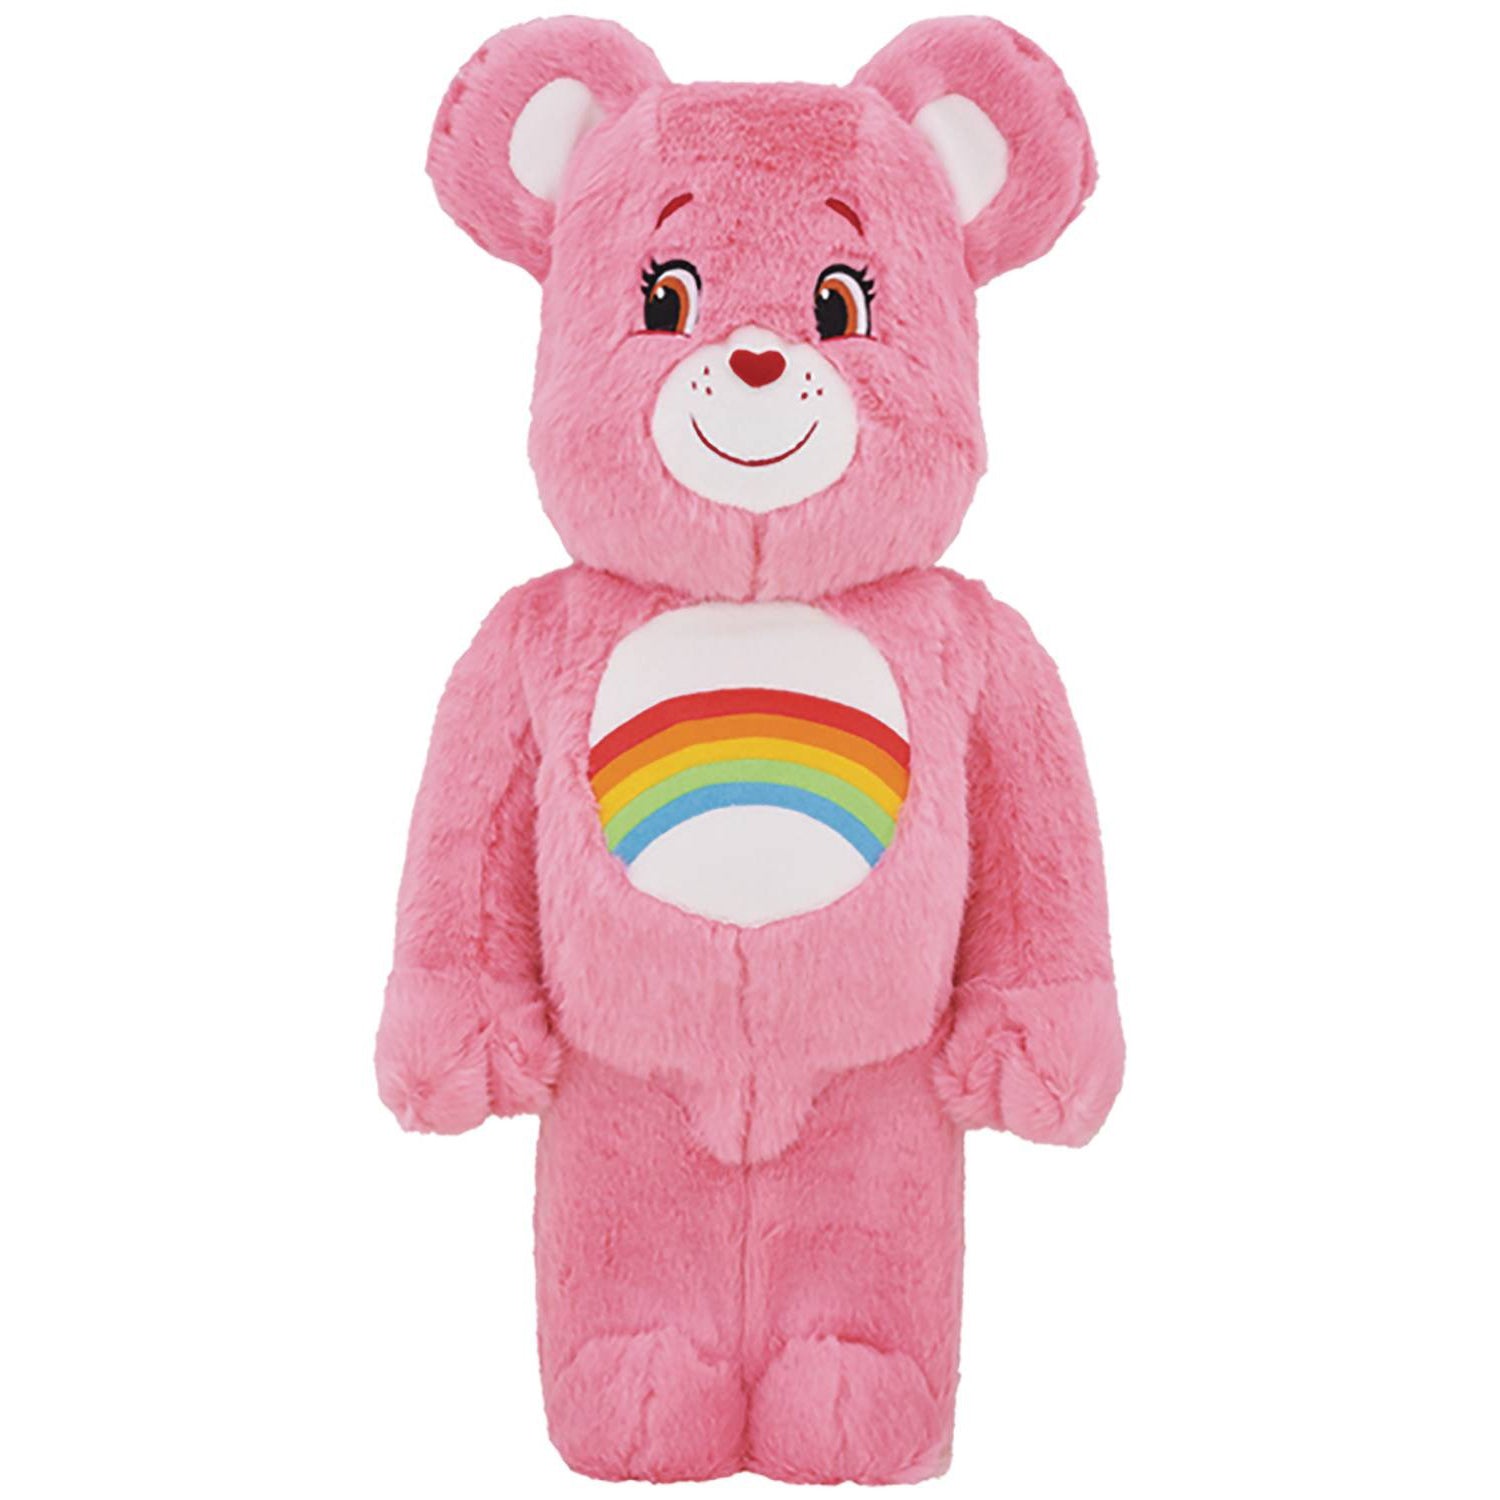 Medicom Japan Care Bears Cheer Bear Costume 1000% Bearbrick AUG218484I - COLLECTIBLES - Canada